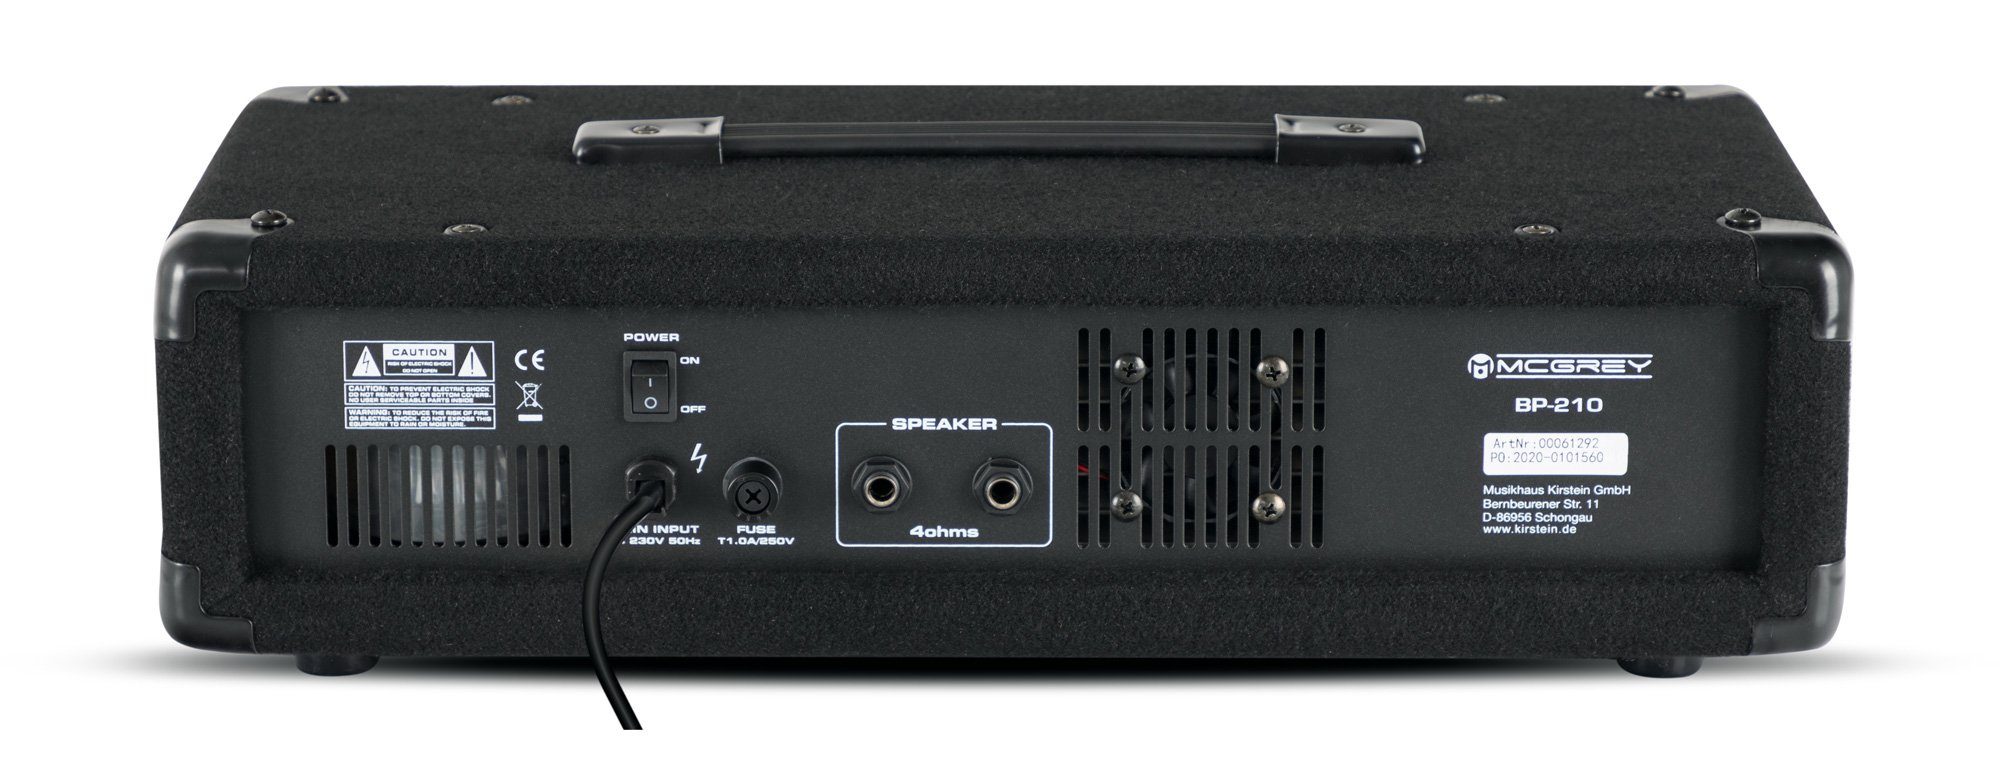 McGrey McGrey BP-210 Powermixer Stative) USB/SD-Slot (Bluetooth, 100 inkl. Bandpack - & 4-Kanal PA-Anlage Mikrofon, W, Kabel 50 Lautsprechersystem Watt 